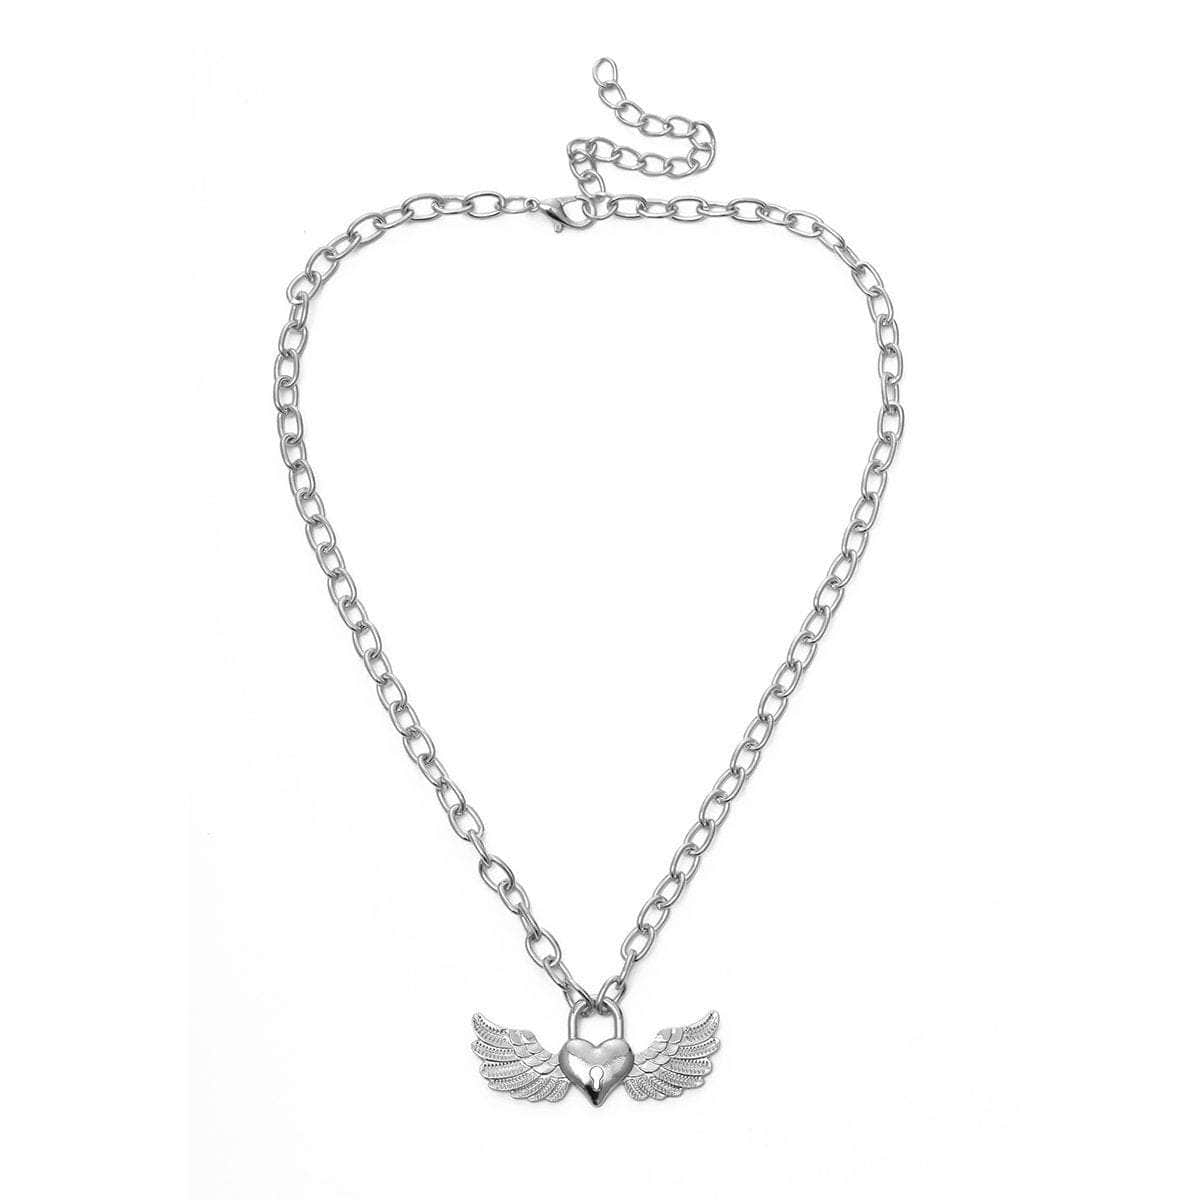 Gold Silver Tone Angel Wings Pendant Chain Necklace - Chic Lock Pendant Metal Chain Necklace - ArtGalleryZen